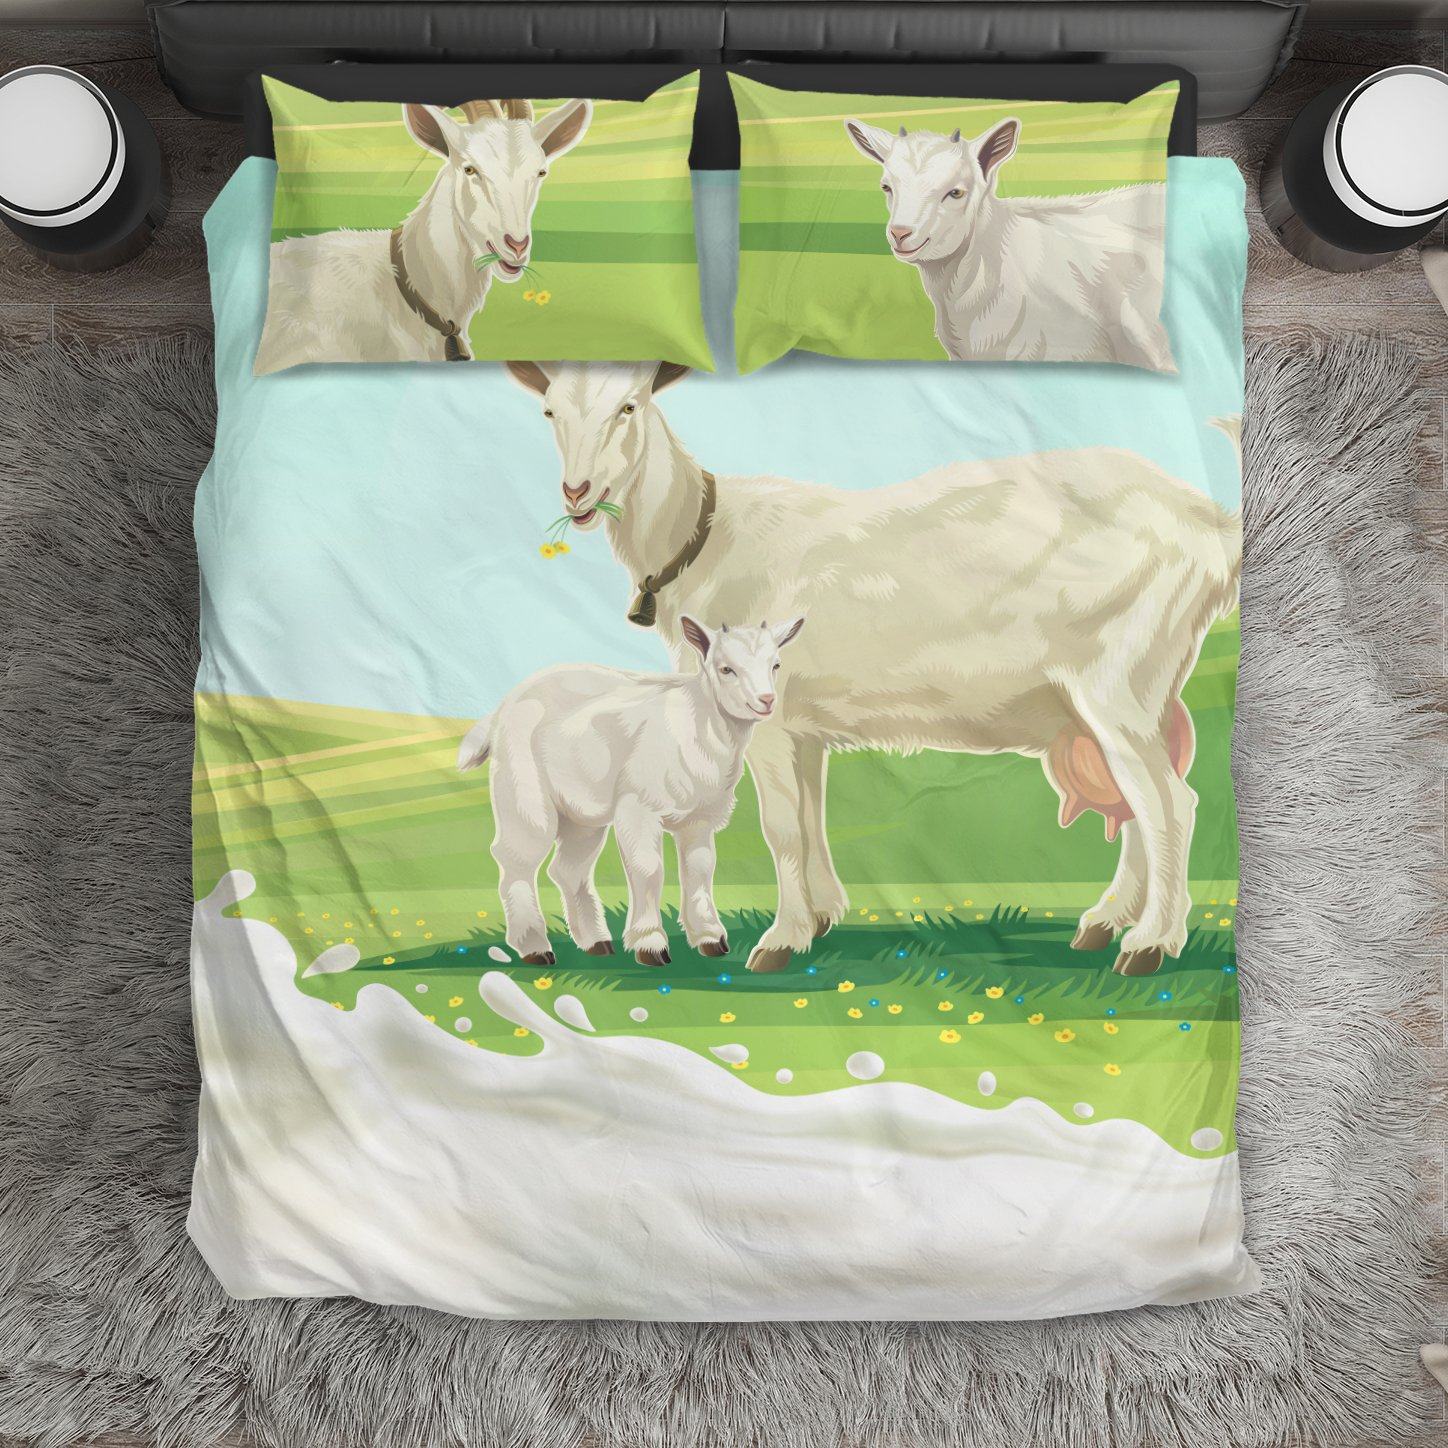 quickpick bedding for goats